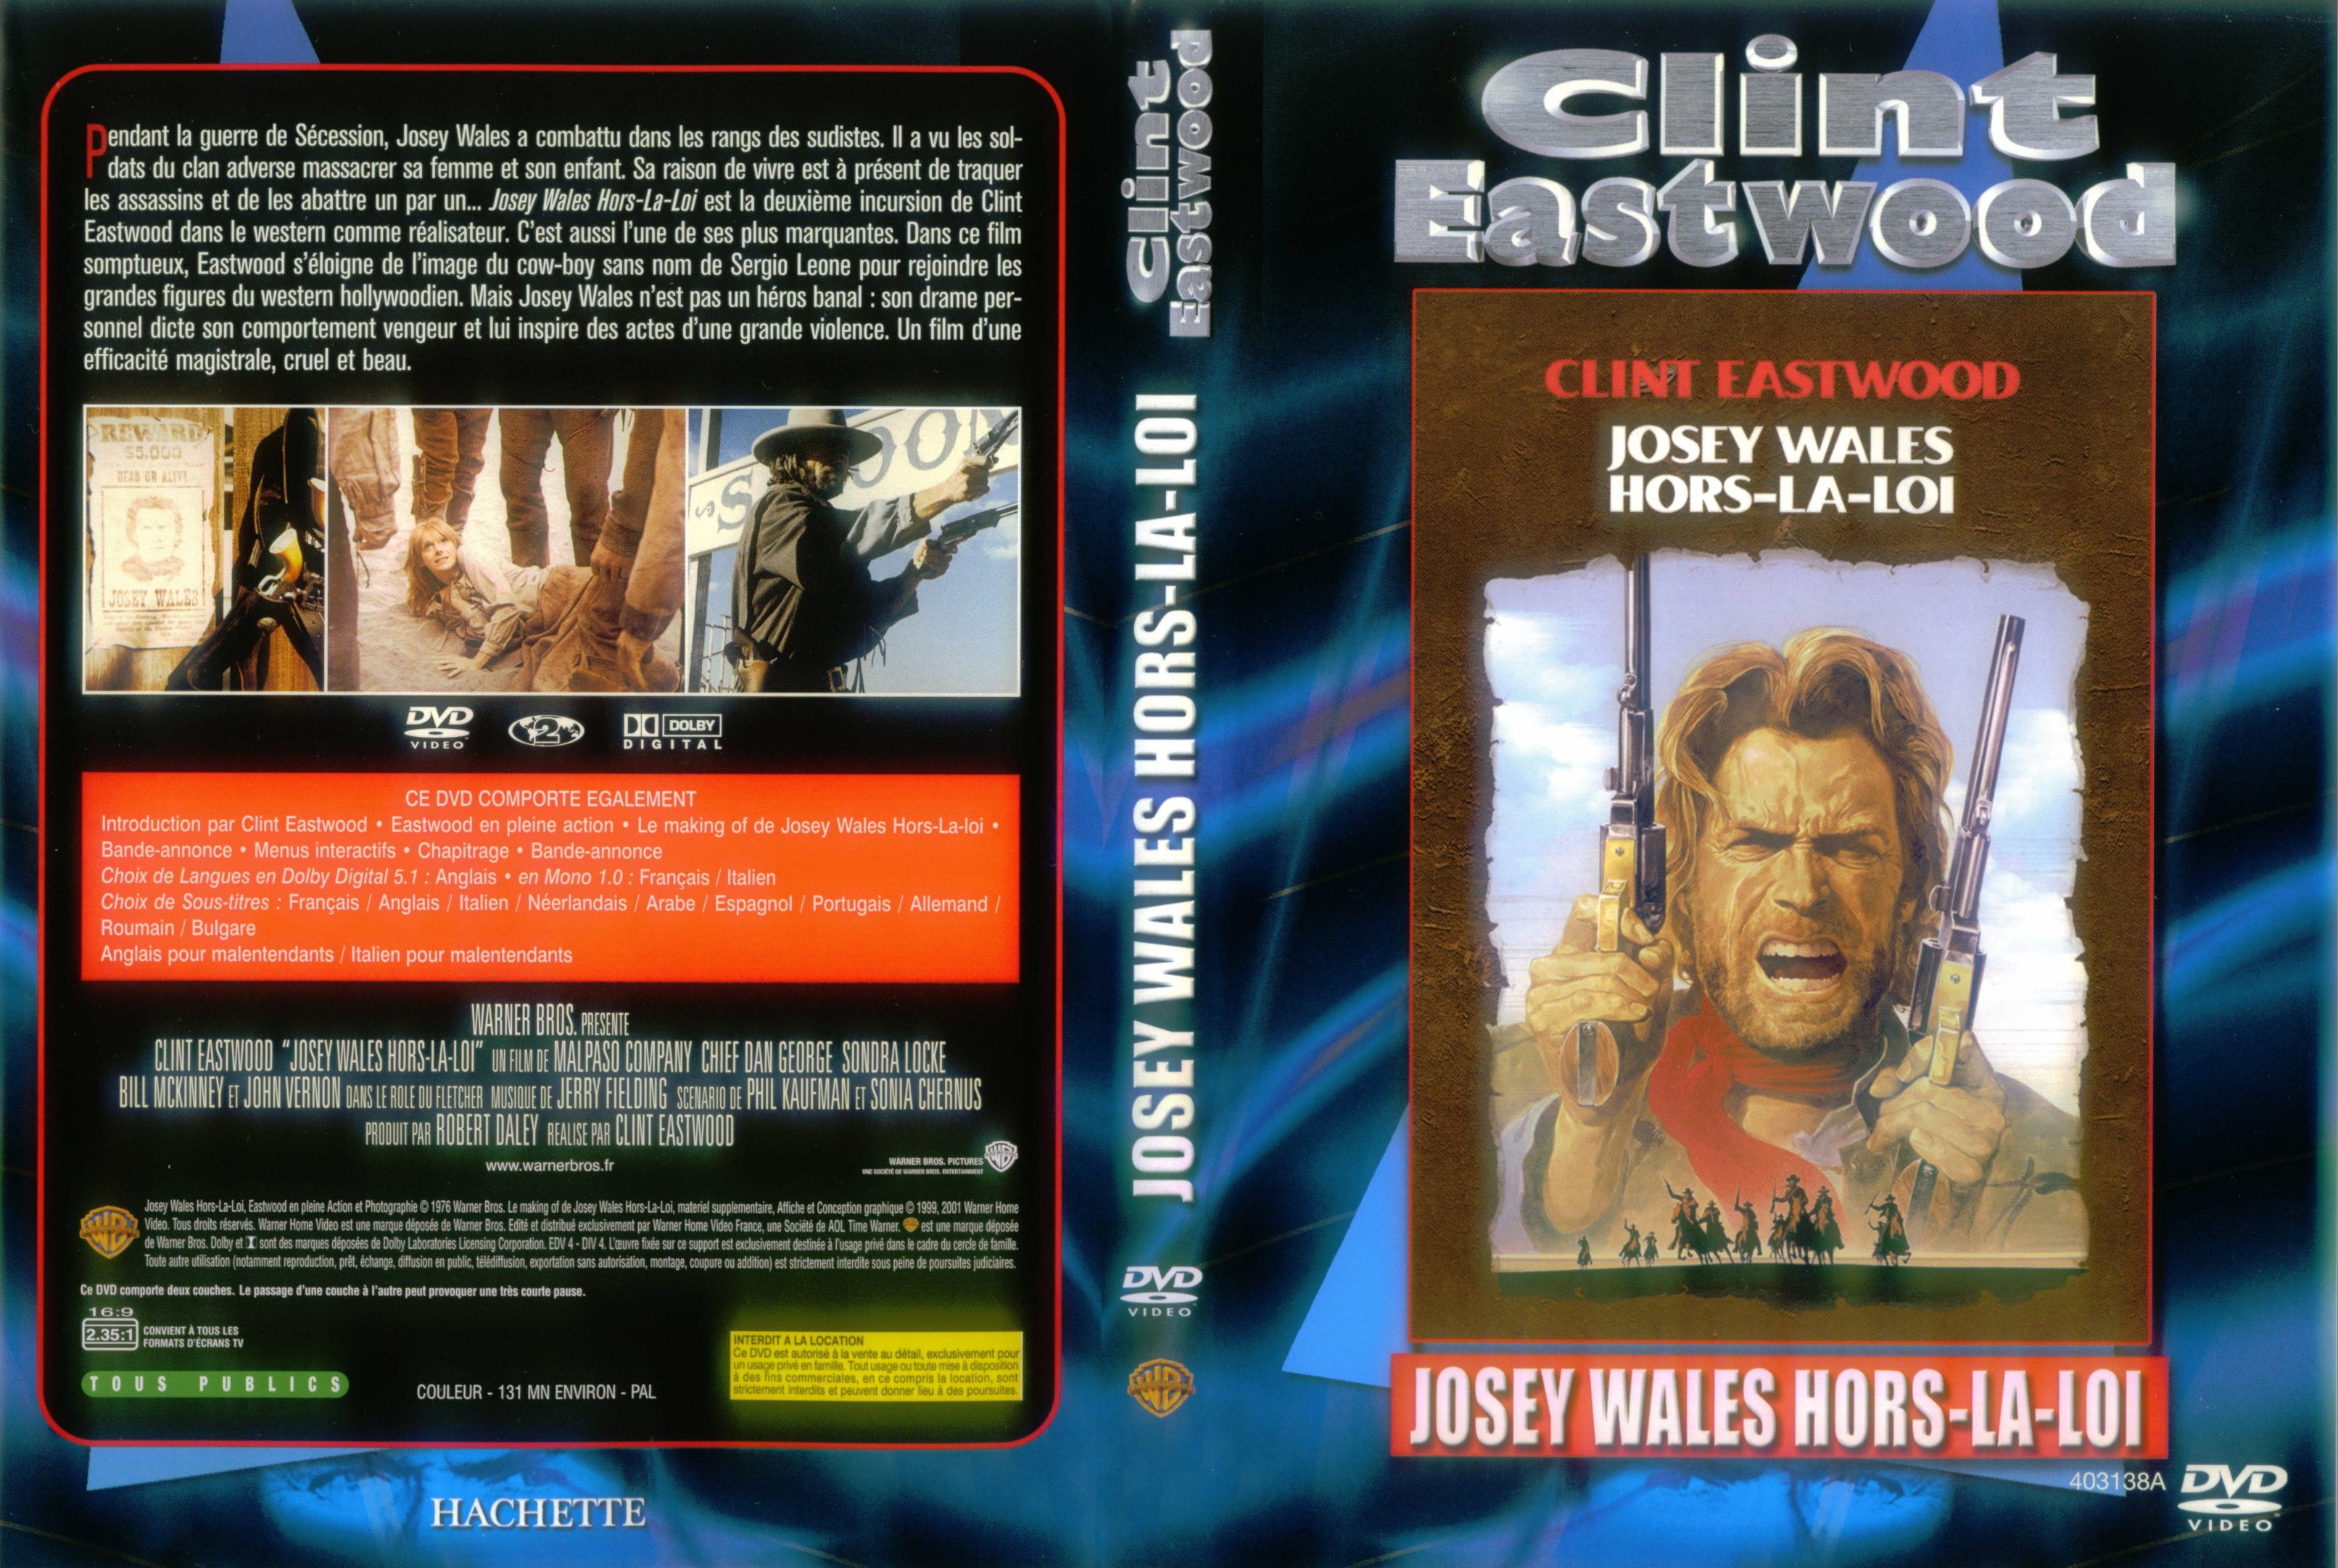 Jaquette DVD Josey Wales hors-la-loi